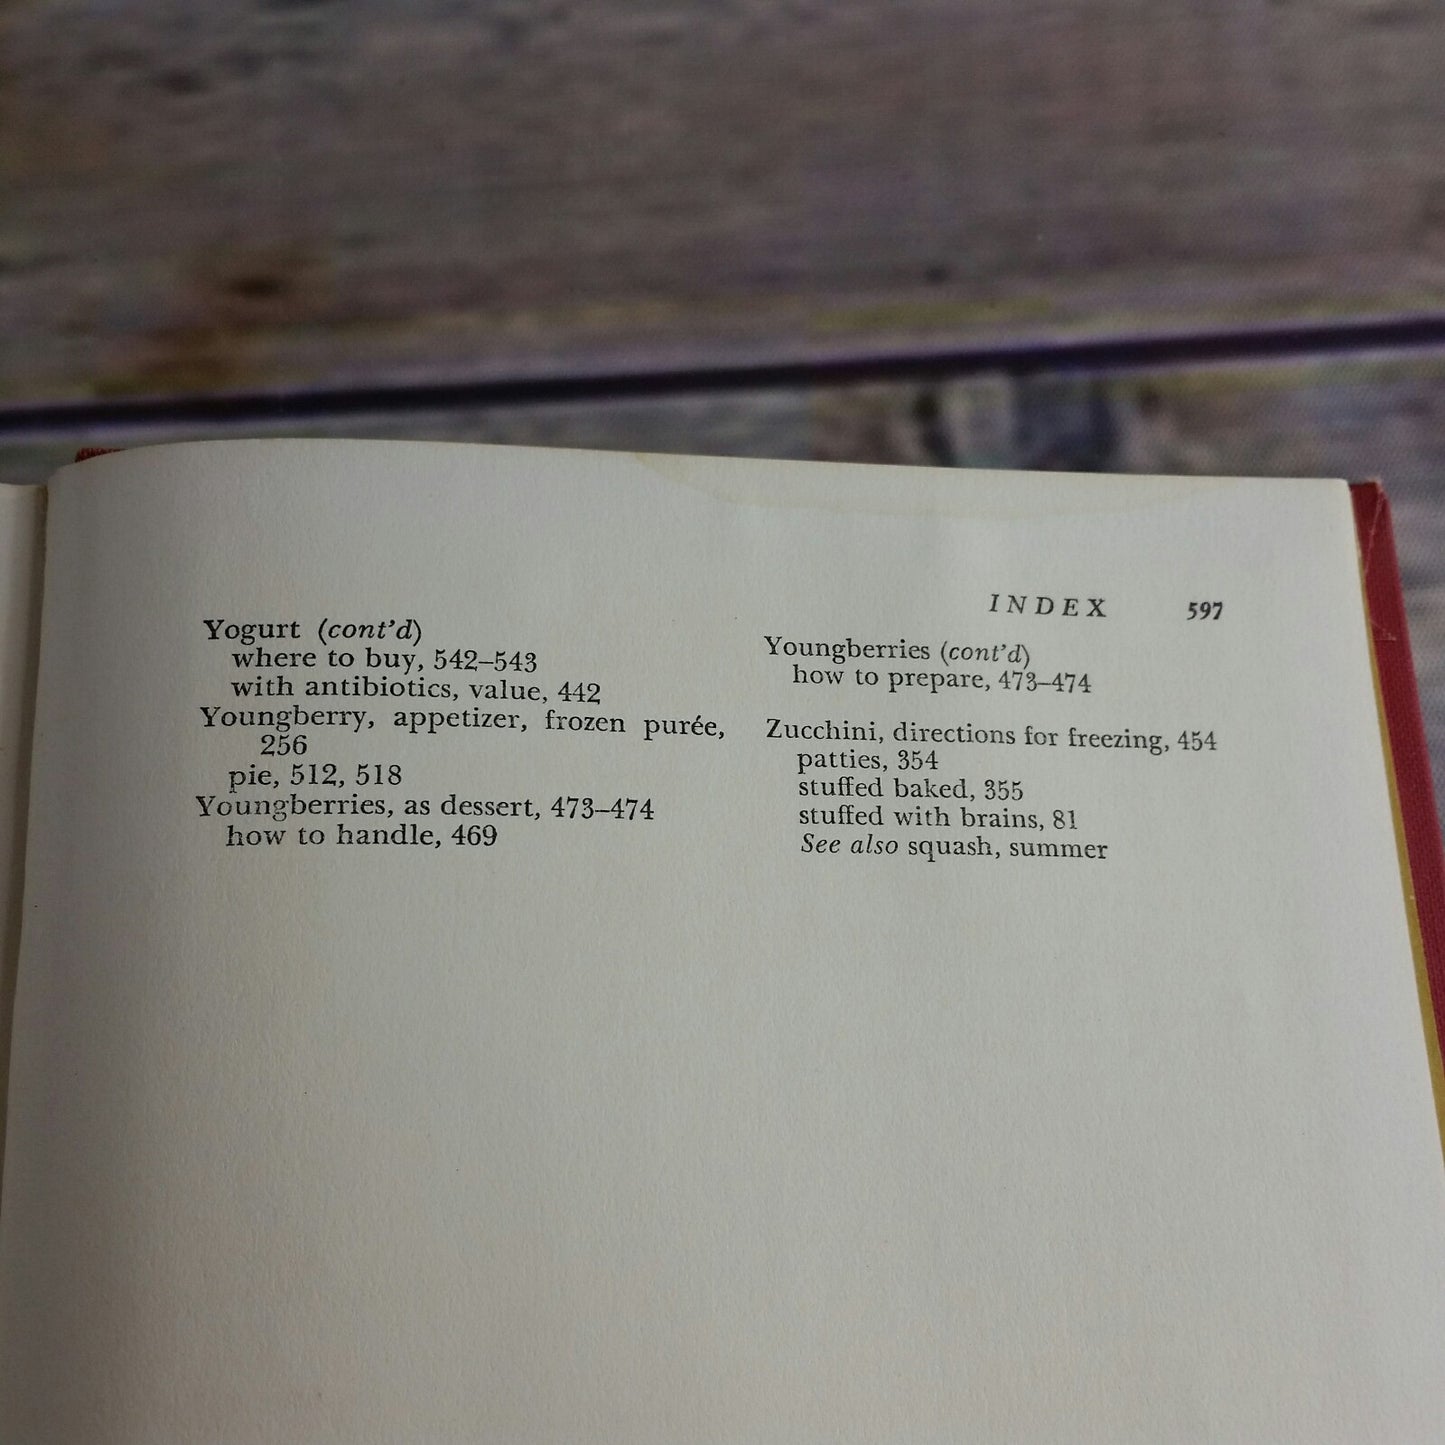 Vintage Cookbook Lets Cook It Right Adelle Davis Nutritionist 1962 Hardcover Cook Book No Dust Jacket